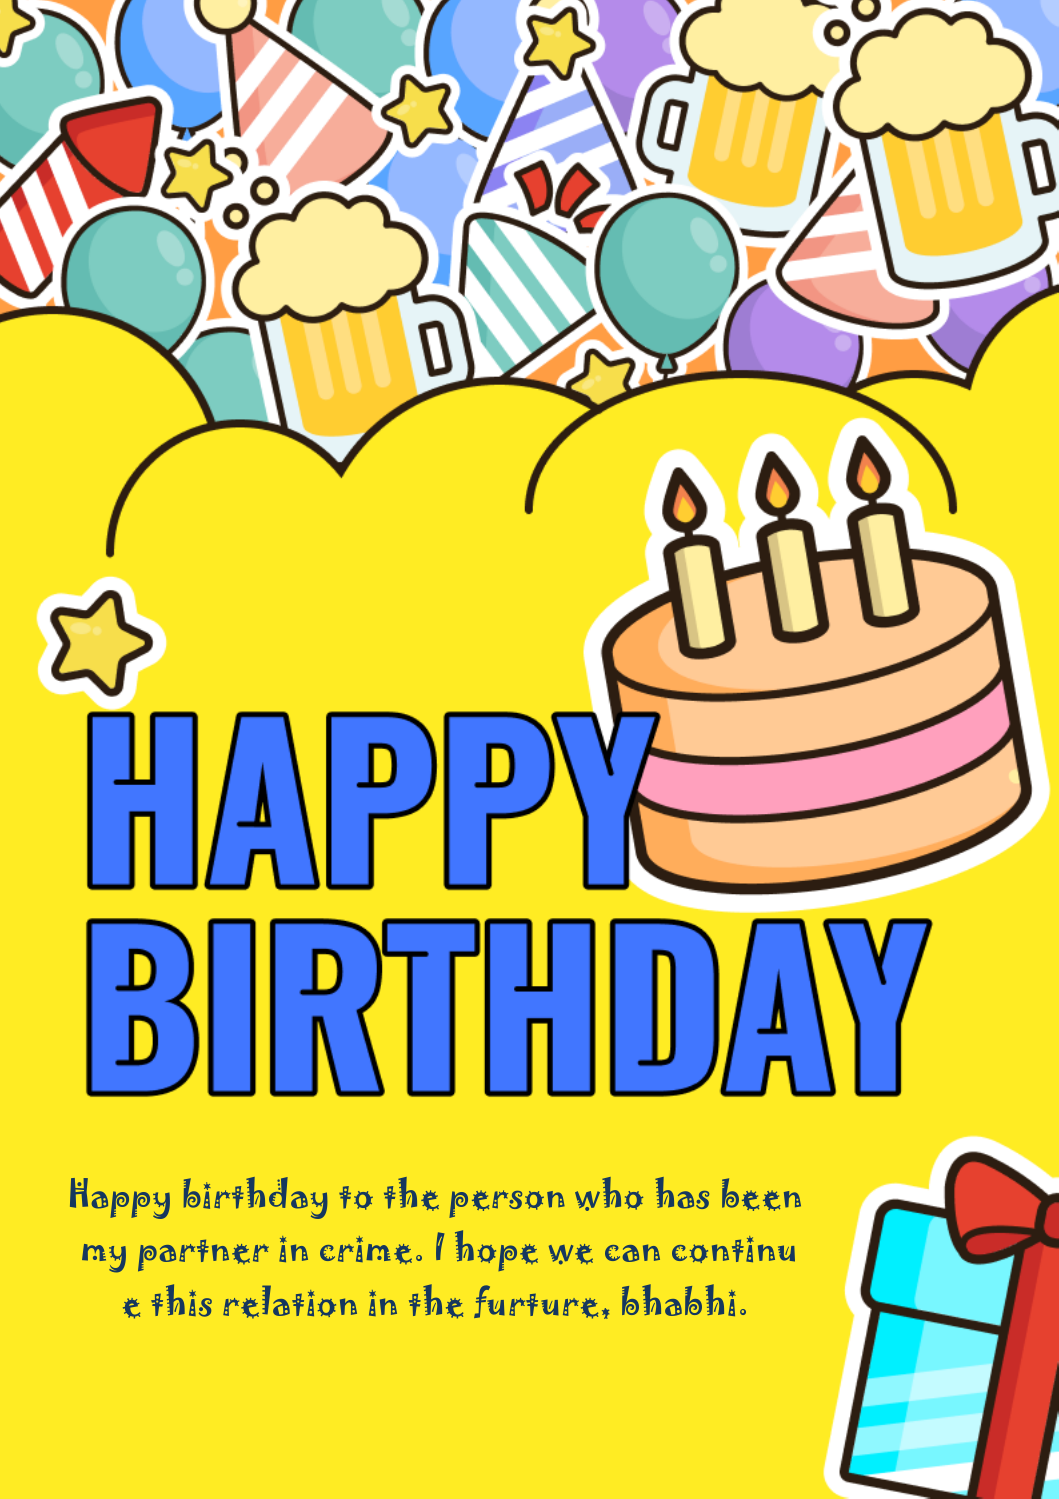 Birthday wishes for bhabhi card 3